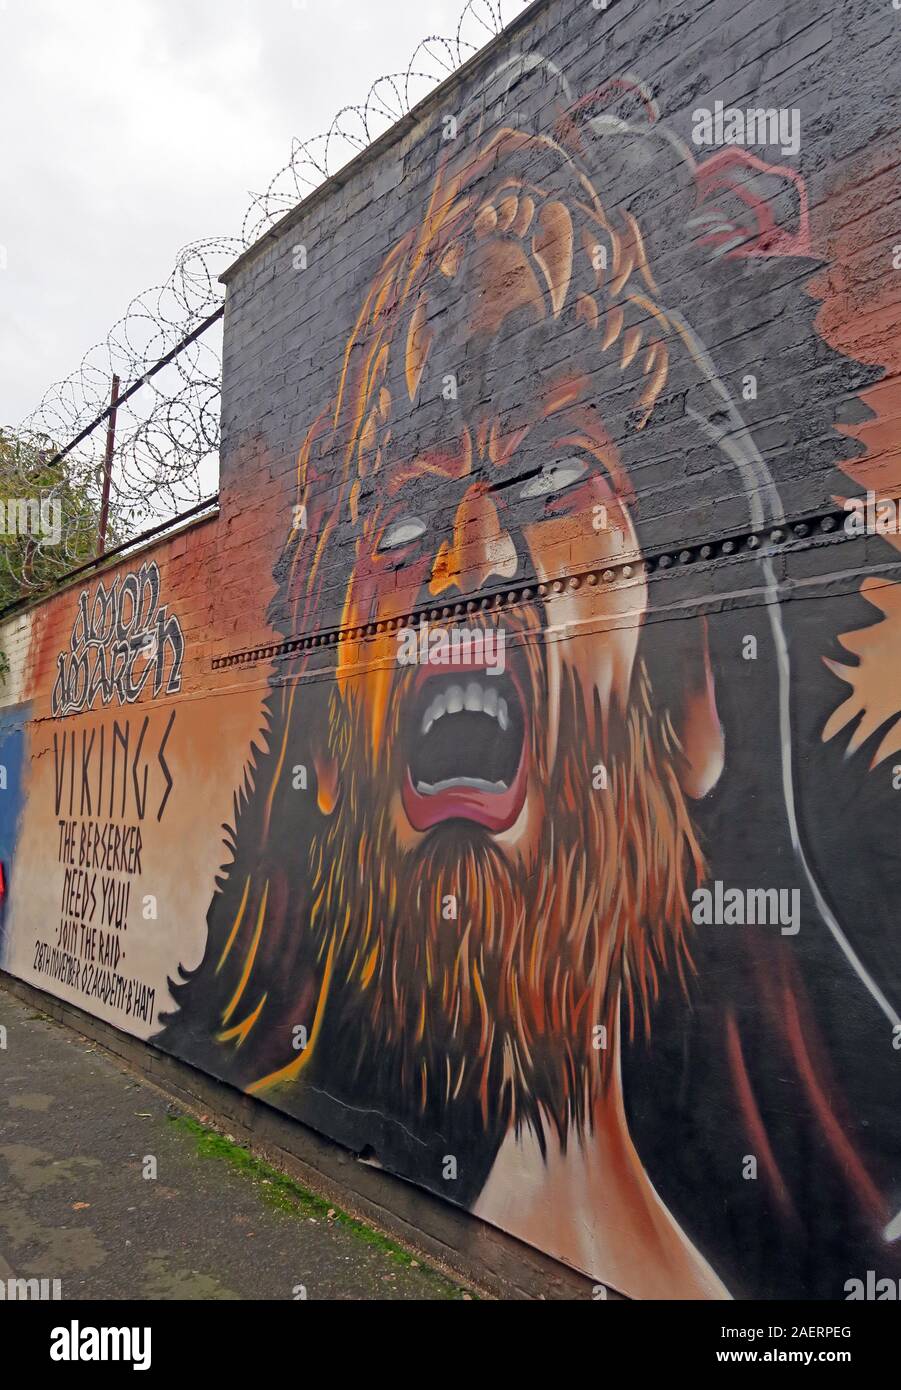 Amon Amarth bring Berserker tour,Graffiti urban street art,in Floodgate St,Digbeth,Bordesley & Highgate,Birmingham,West Midlands,England,UK,B5 5ST Stock Photo